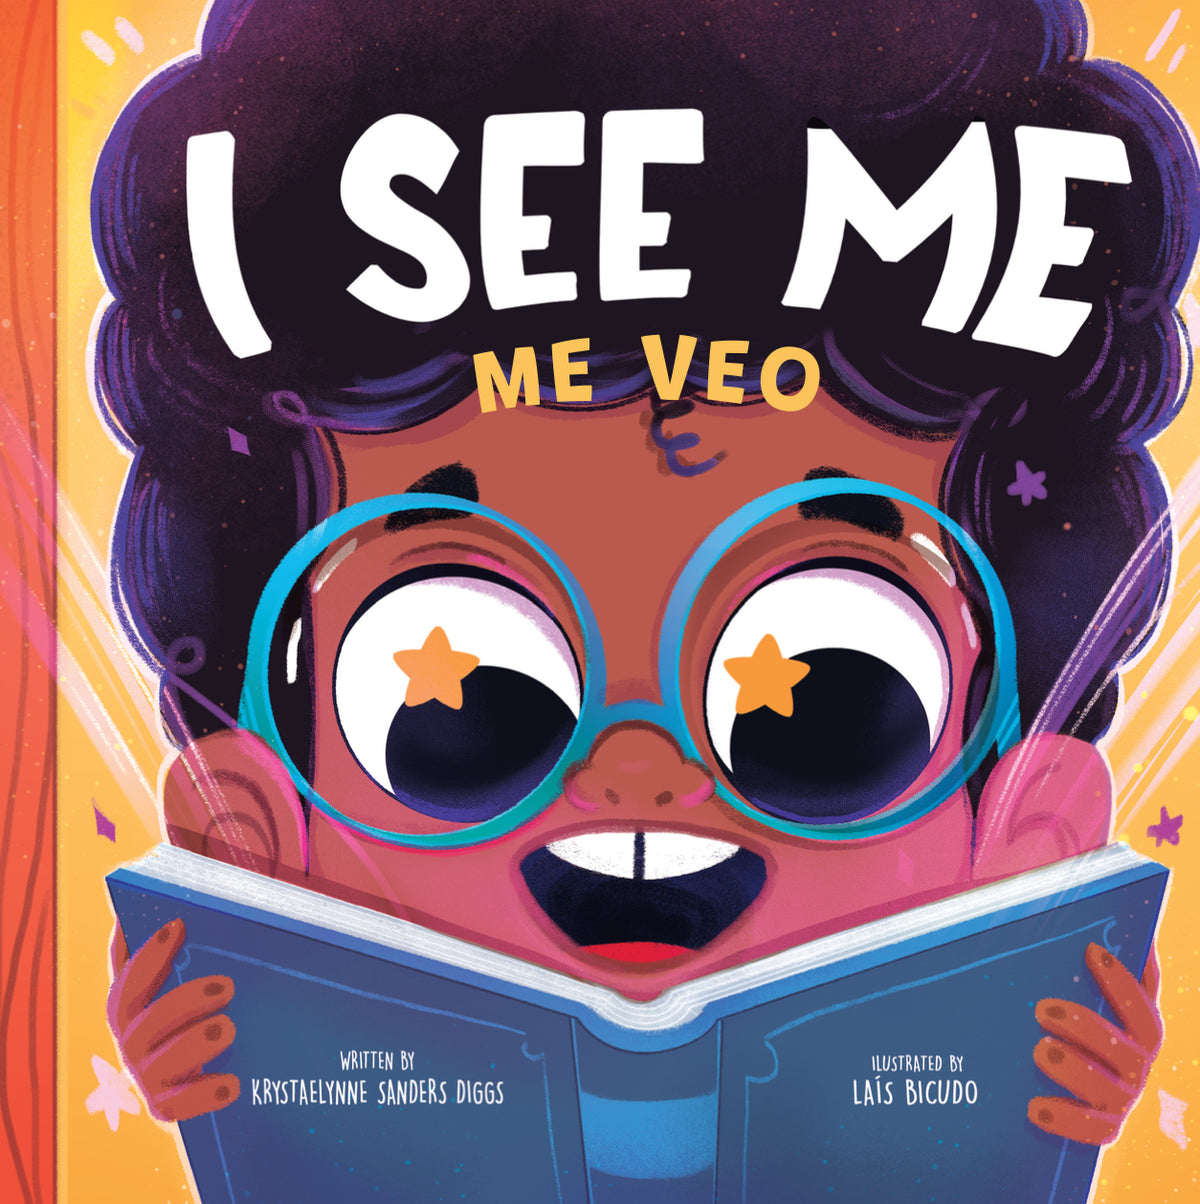 I See Me: Me Veo (Bilingual) - Author Krystaelynne Sanders Diggs [Body Safety]